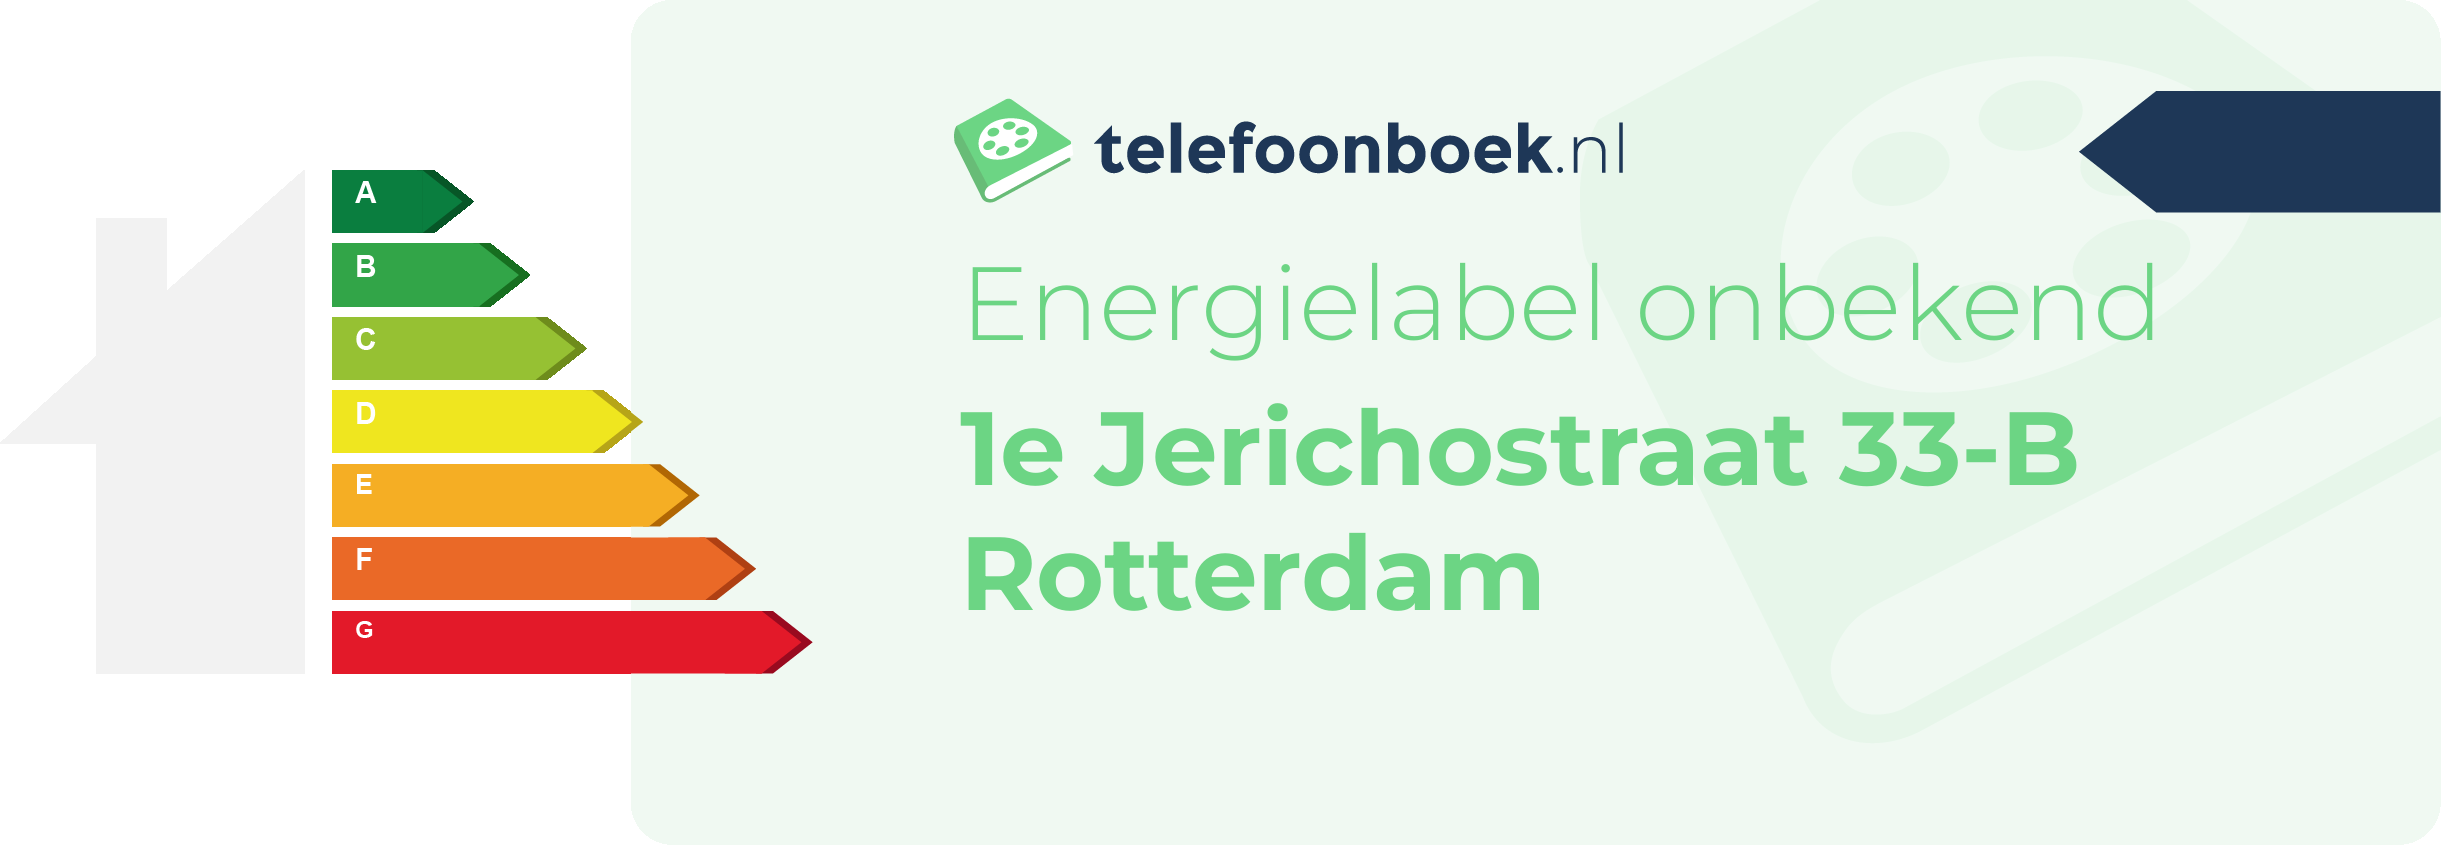 Energielabel 1e Jerichostraat 33-B Rotterdam